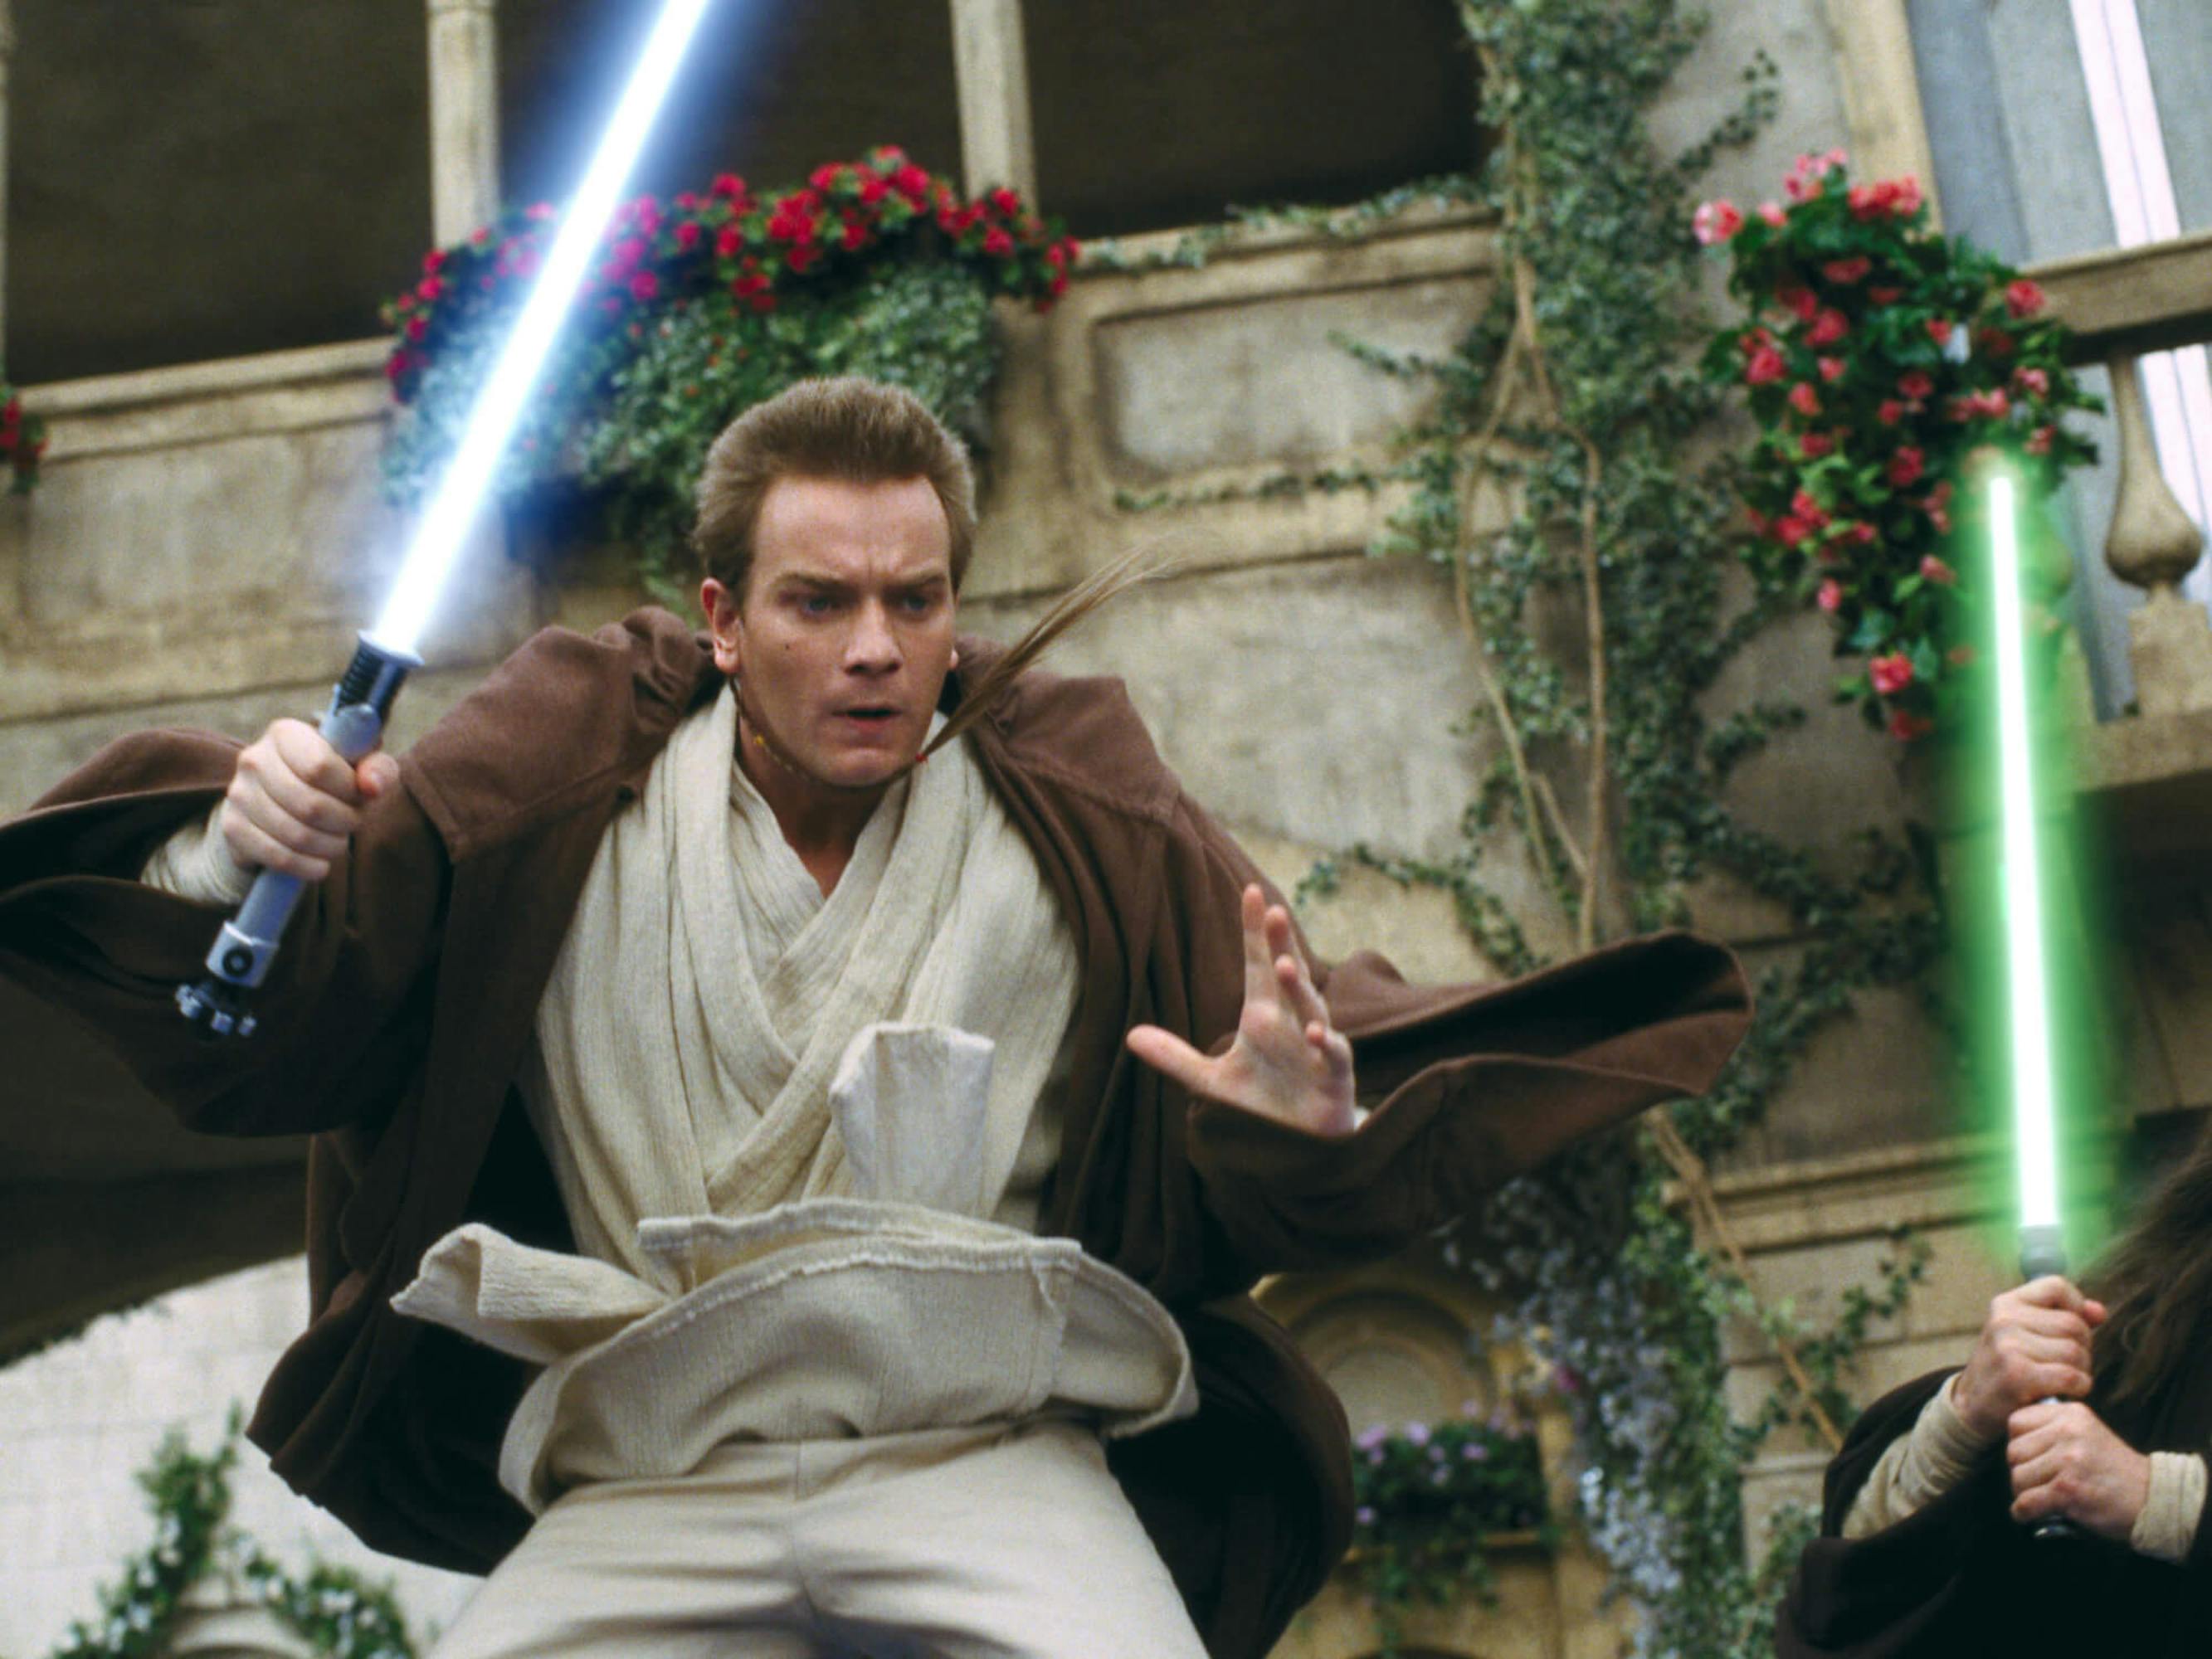 Obi-Wan Kenobi (Ewan McGregor) in Star Wars: Episode I - The Phantom Menace wears light colored robes as he jumps into action holding his lightsaber.